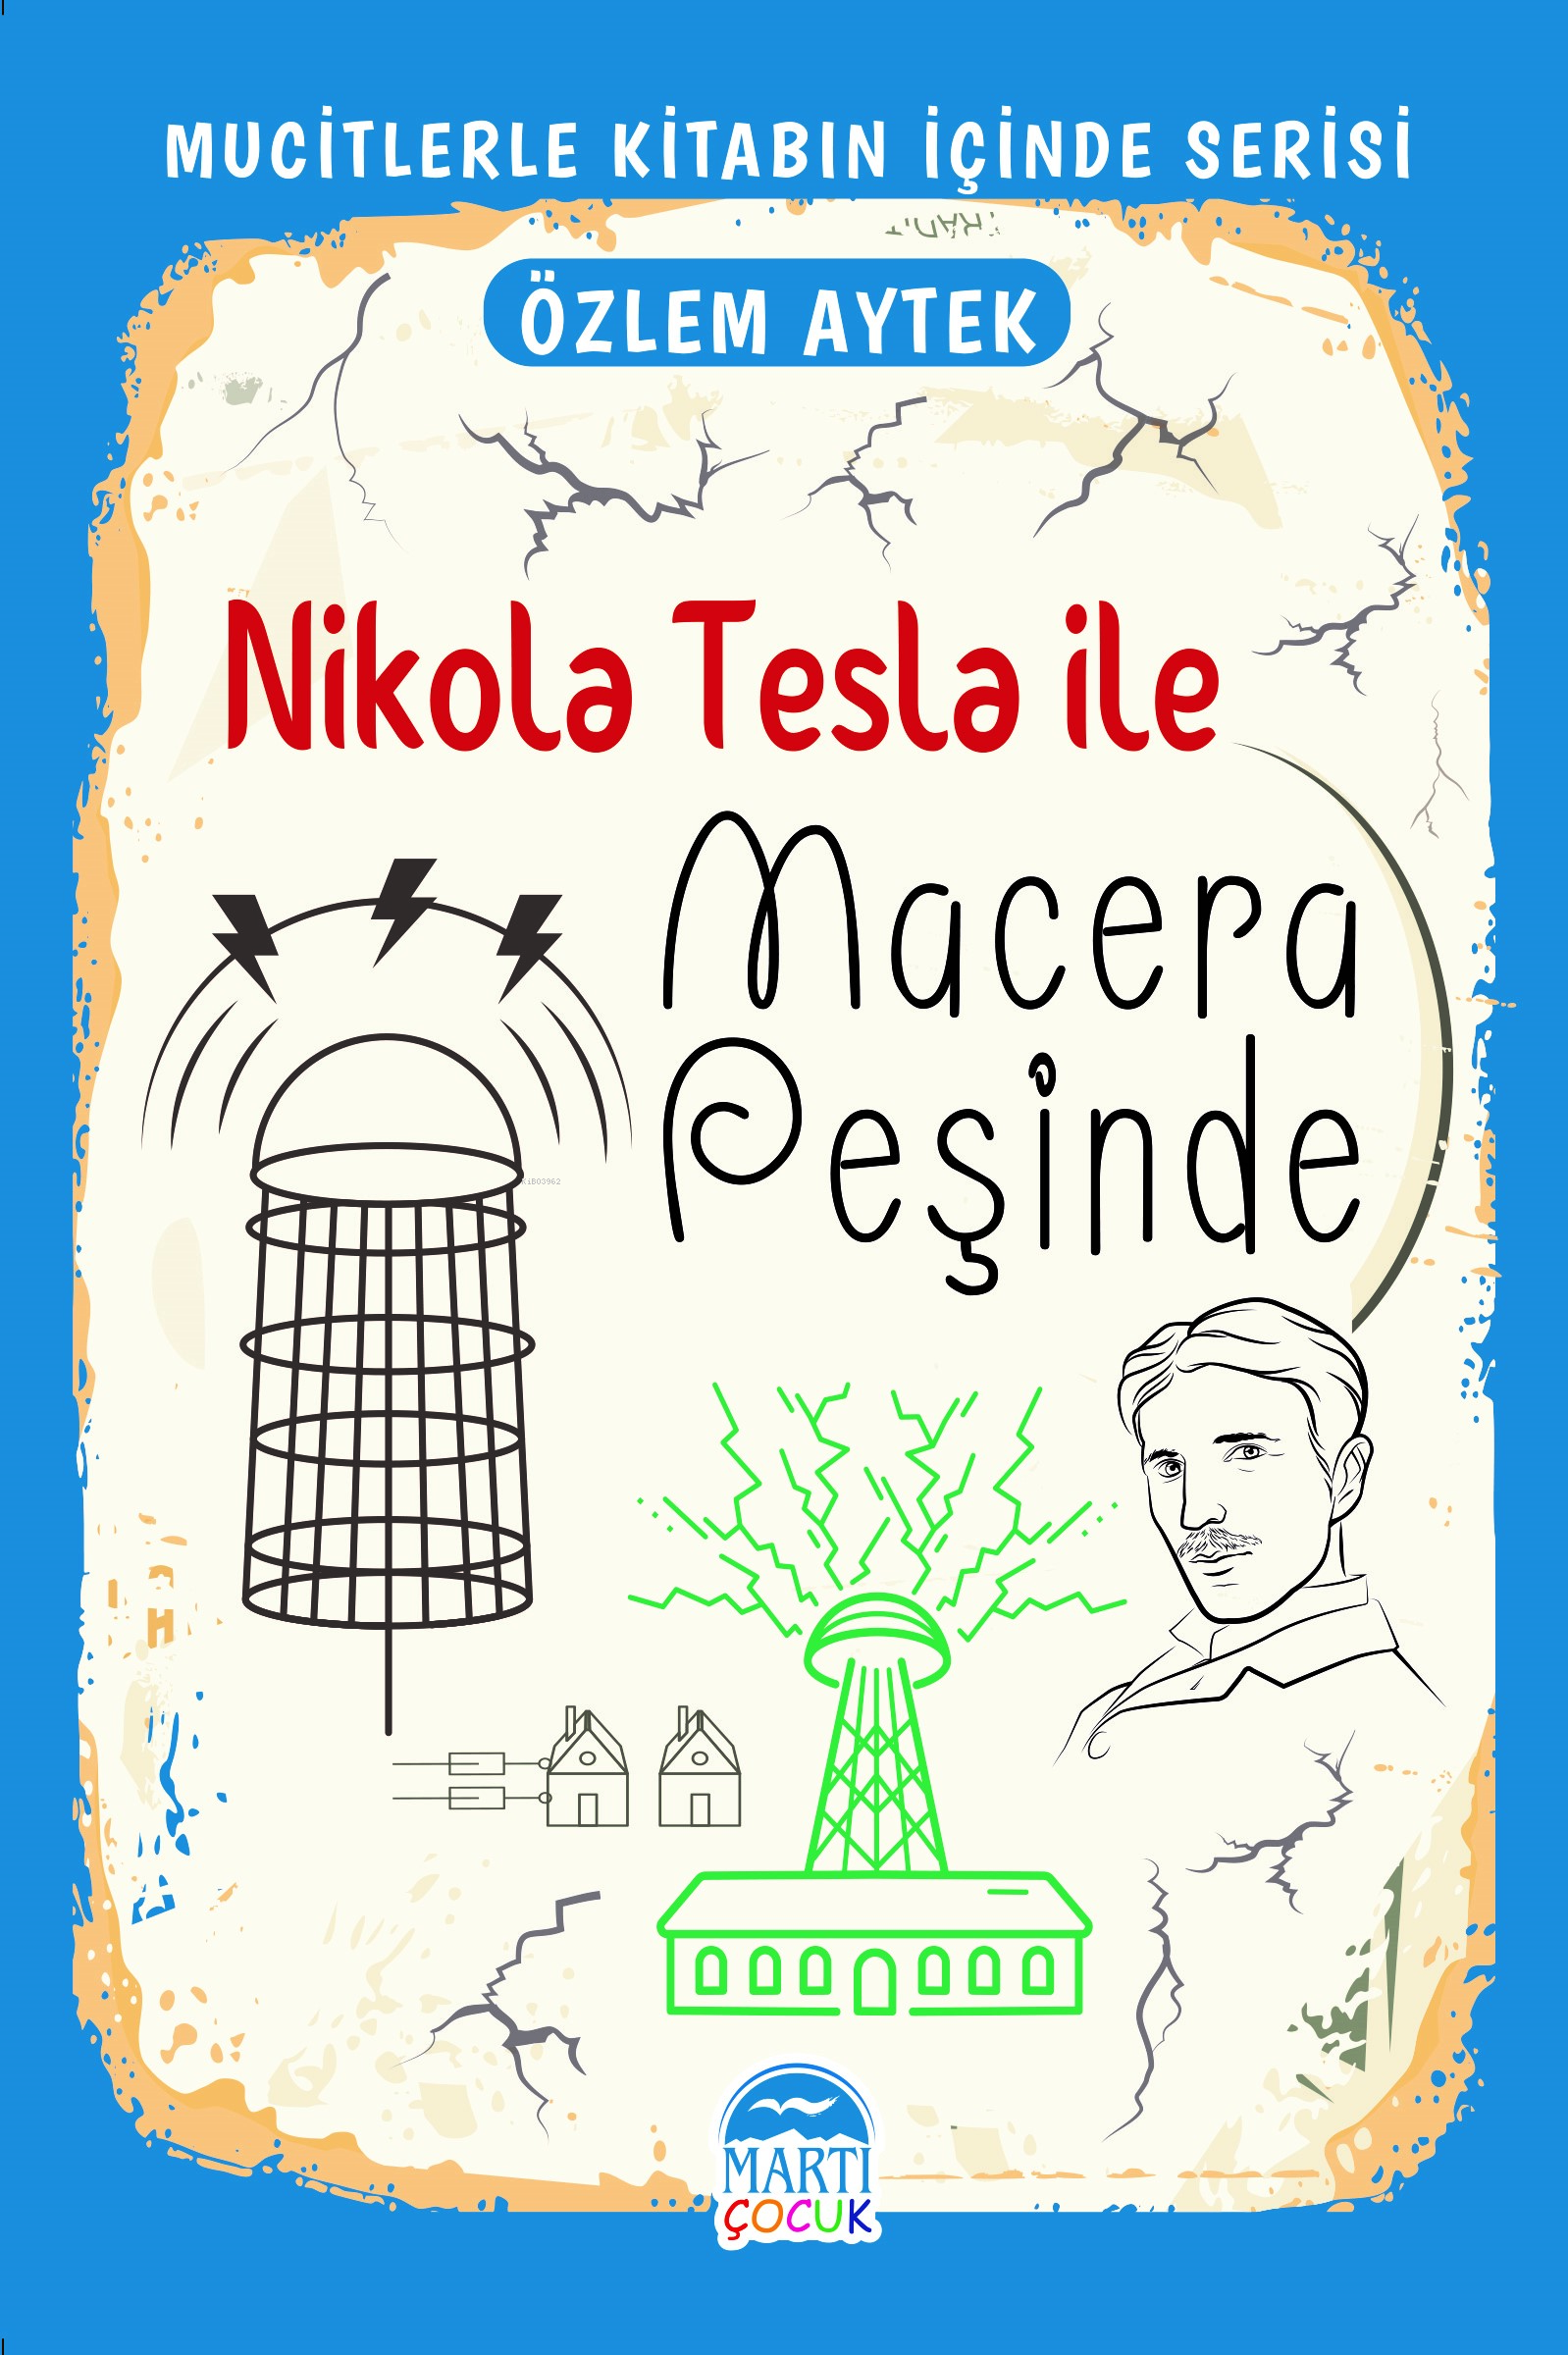 Nikola Tesla ile Macera Peşinde